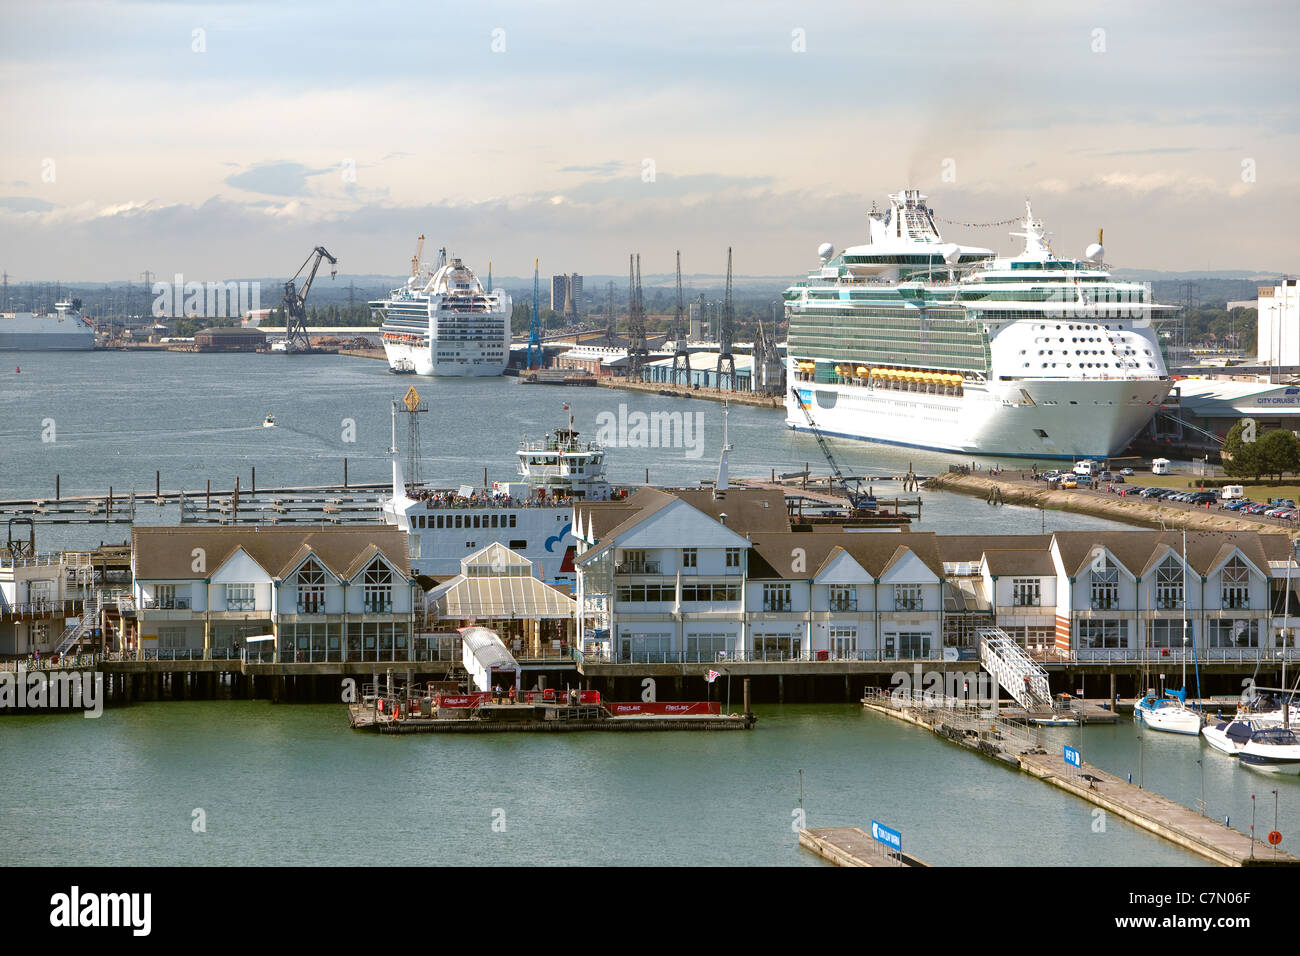 Port of Southampton looking across at a cruise ship loading passengers at  the Western docks. Southampton waterfront England UK Stock Photo - Alamy